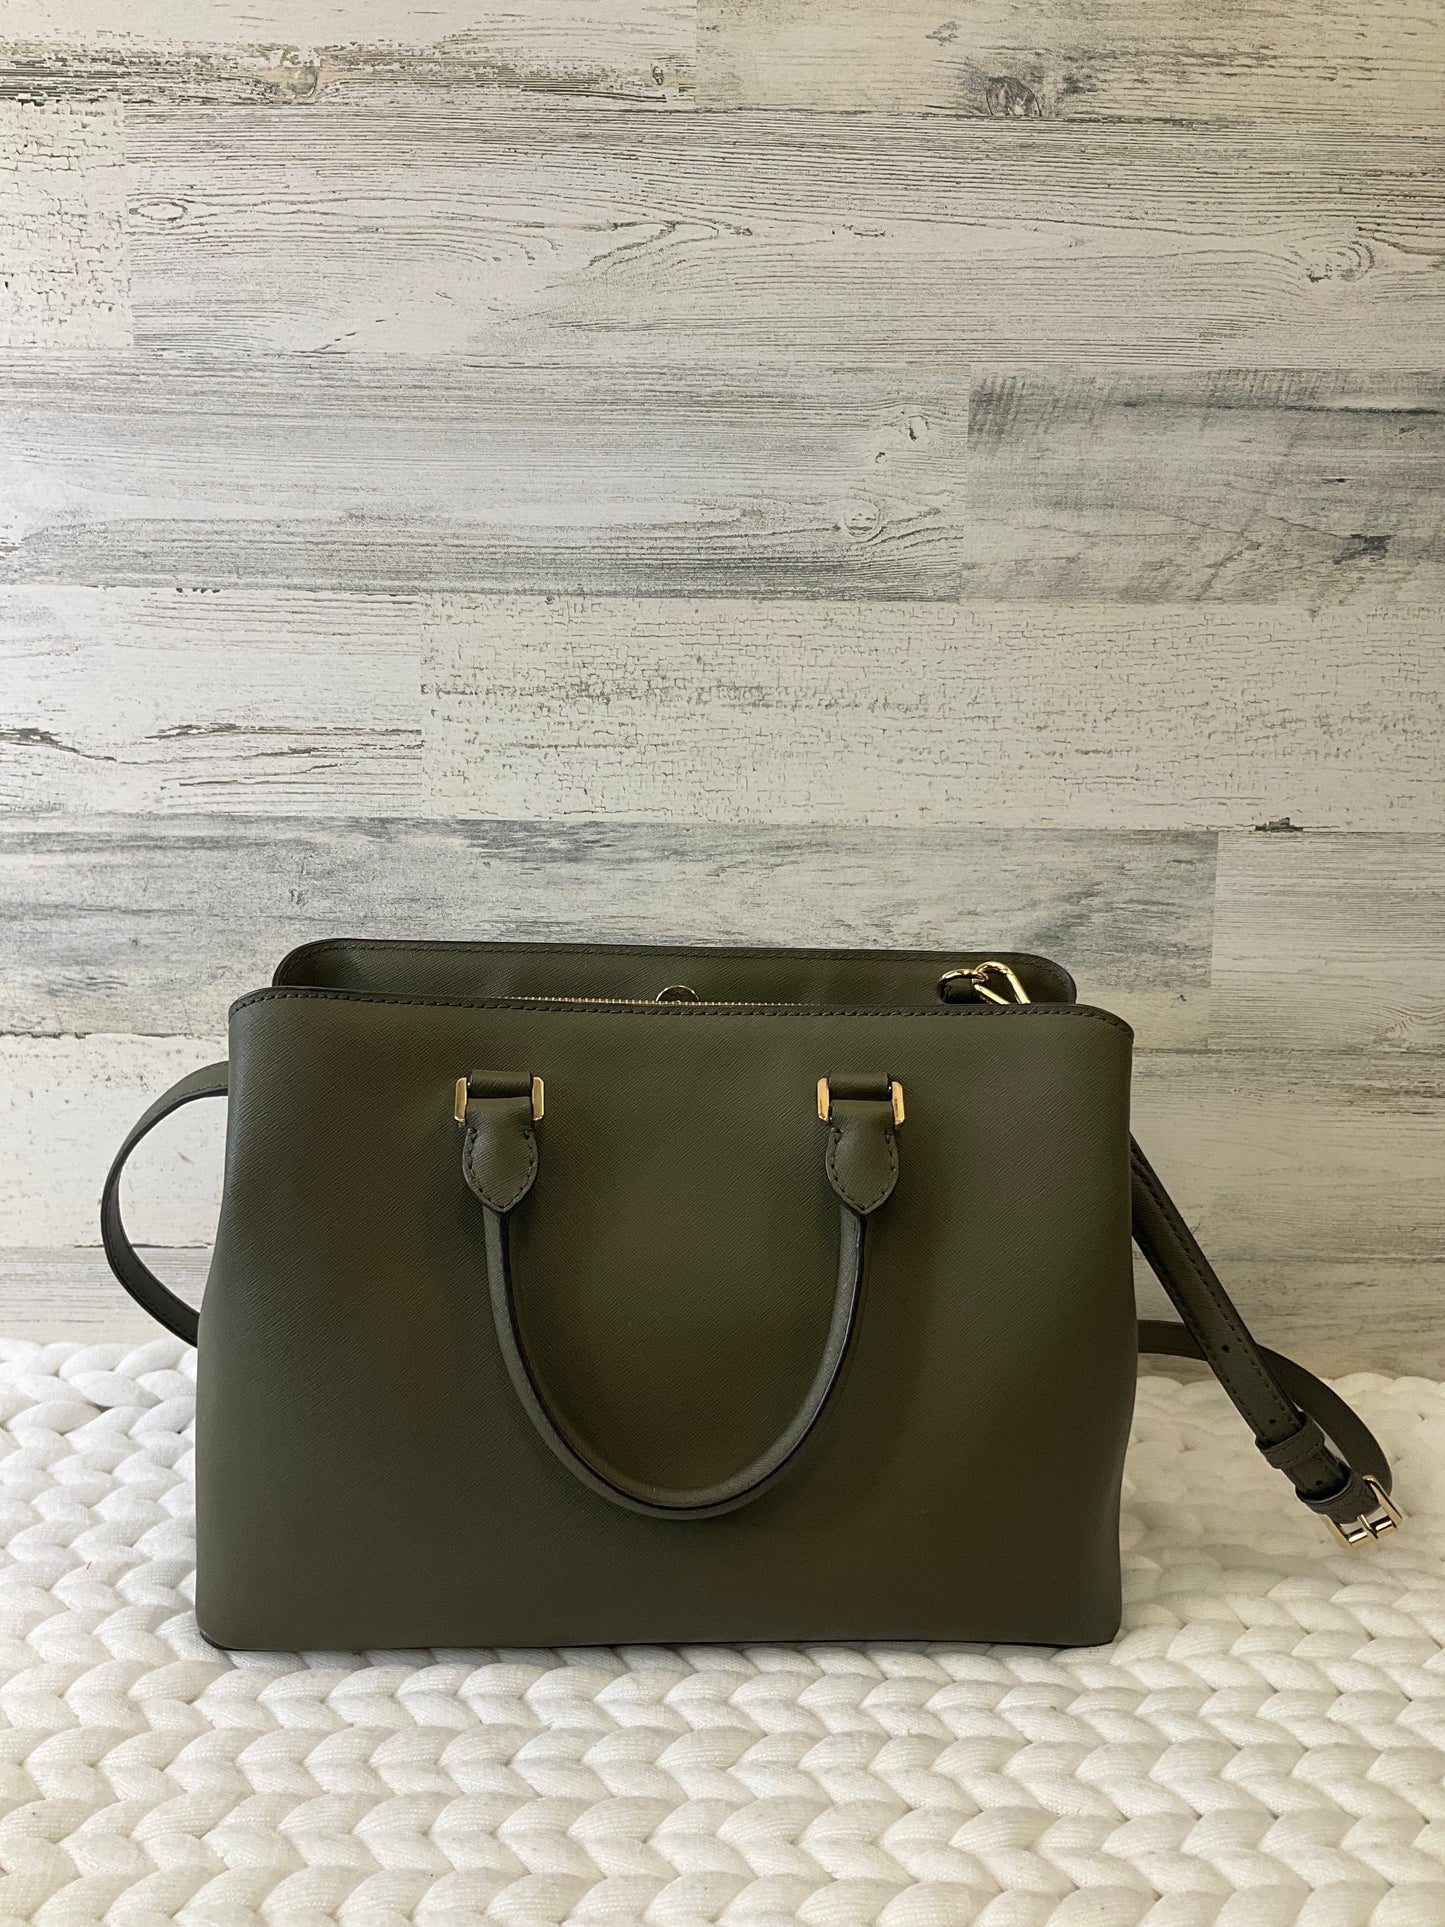 Handbag Leather Michael Kors, Size Medium